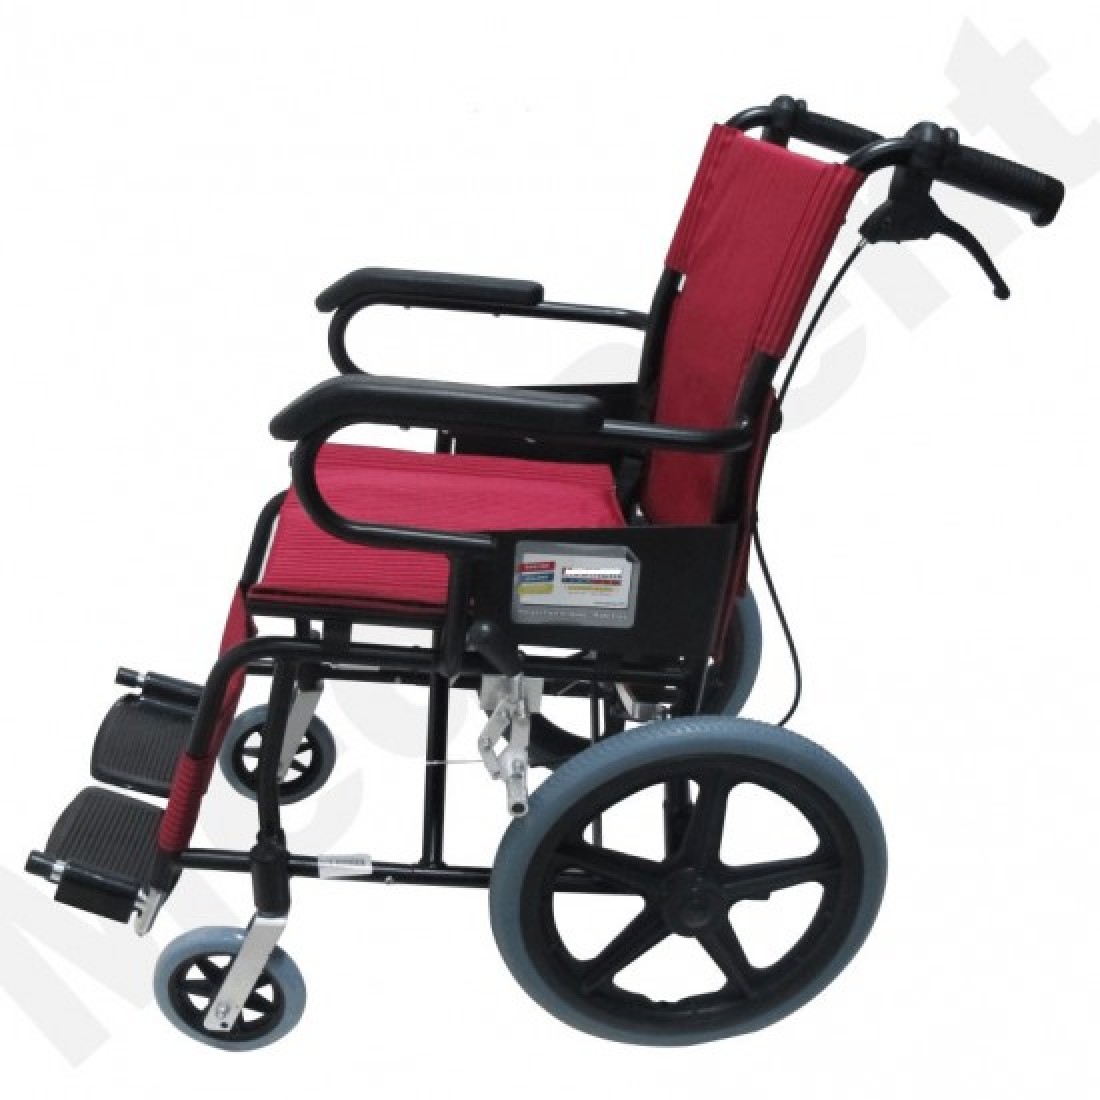 Attendant Wheelchair @ Rs 11500 : Attendant Propelled Wheelchair